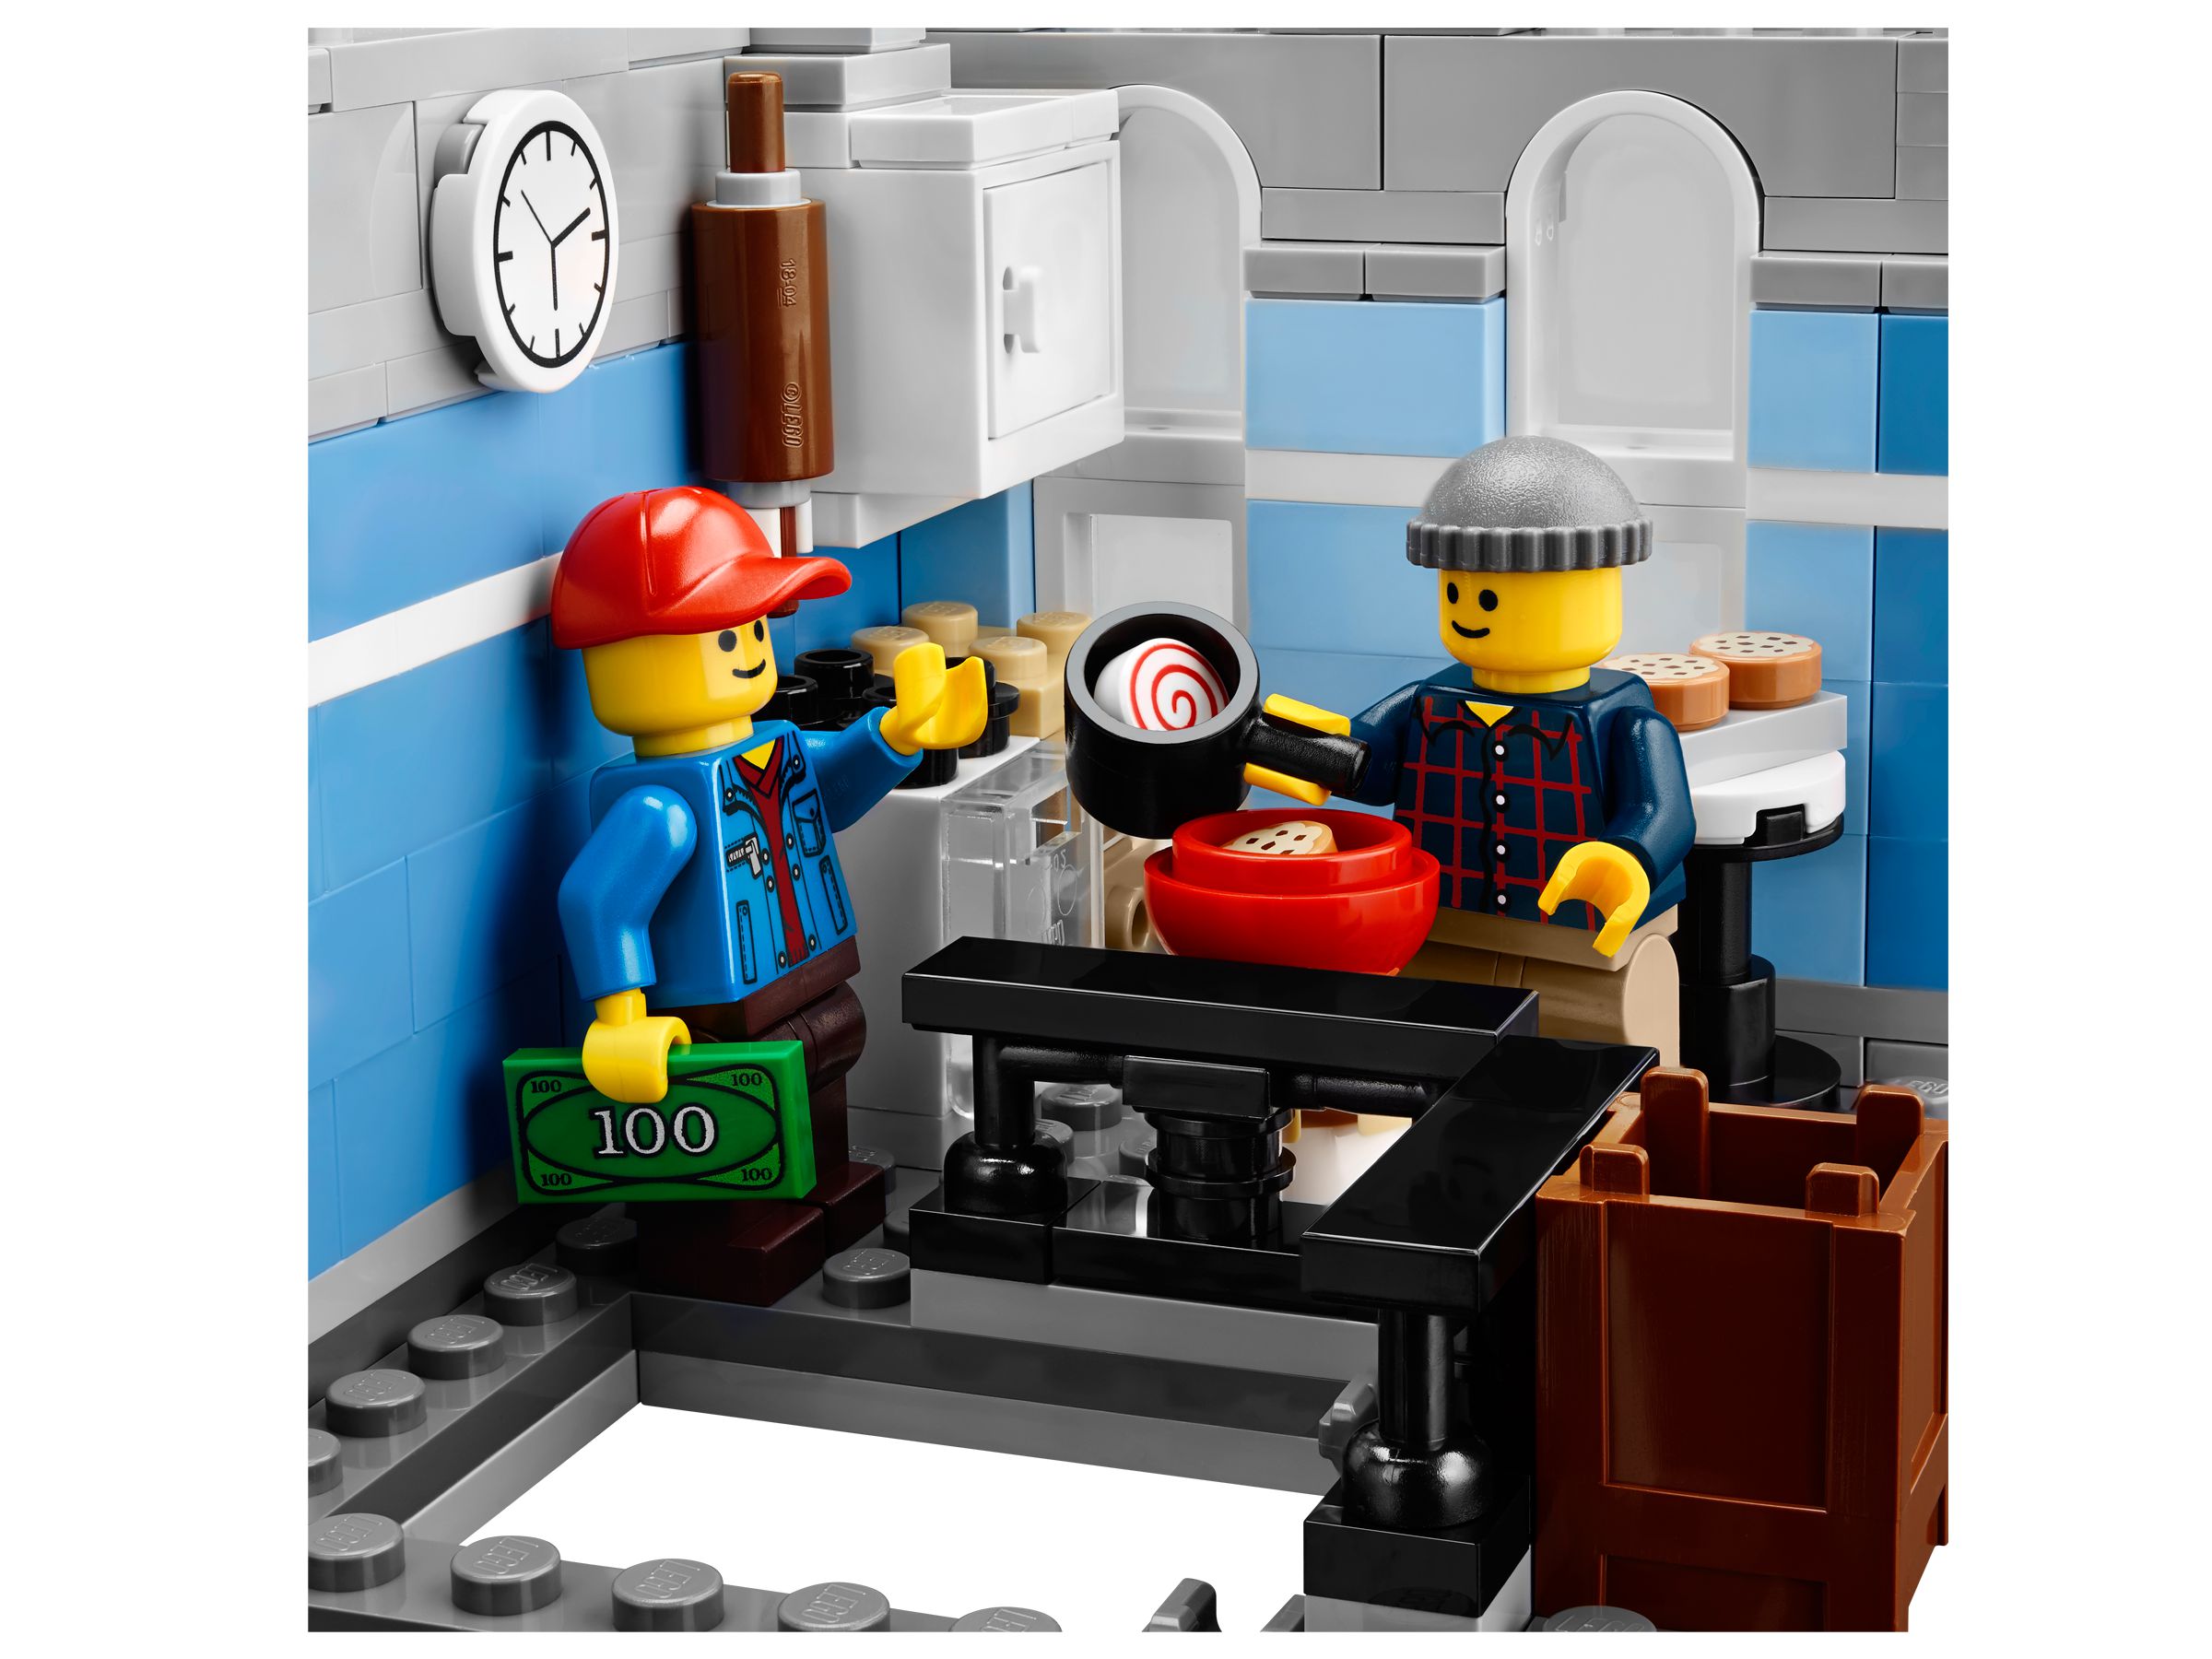 LEGO Advanced Models 10246 Detektivbüro LEGO_10246_alt9.jpg